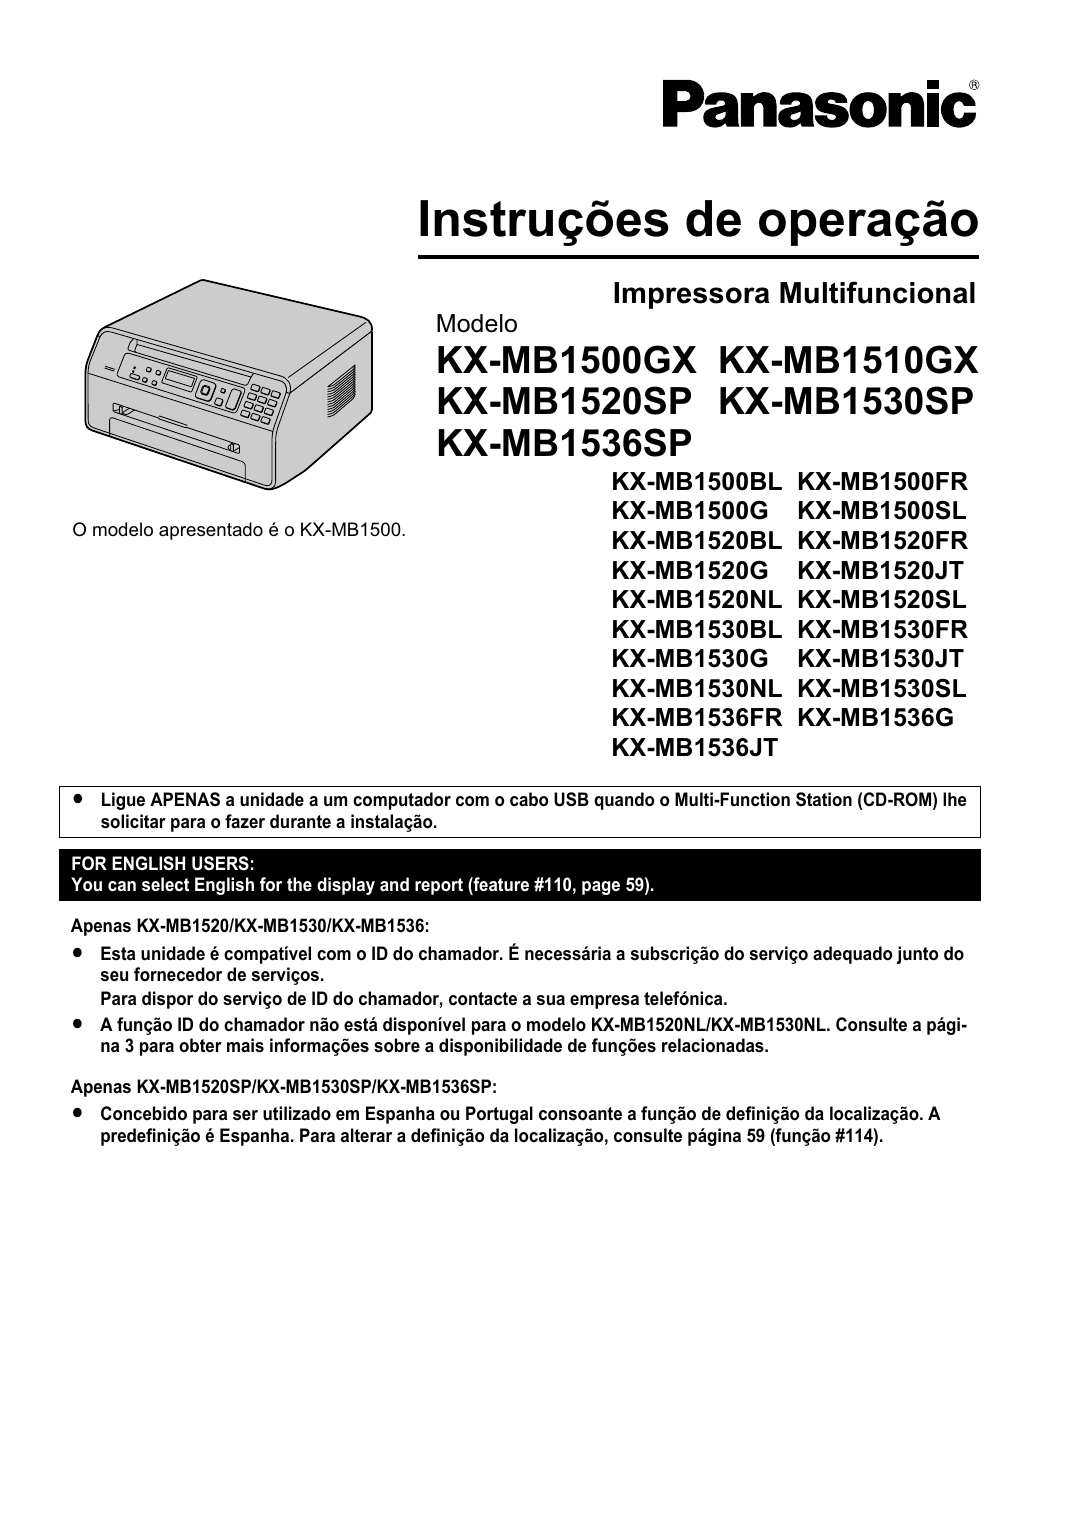 Panasonic Kx-mb1500 Driver Download For Mac